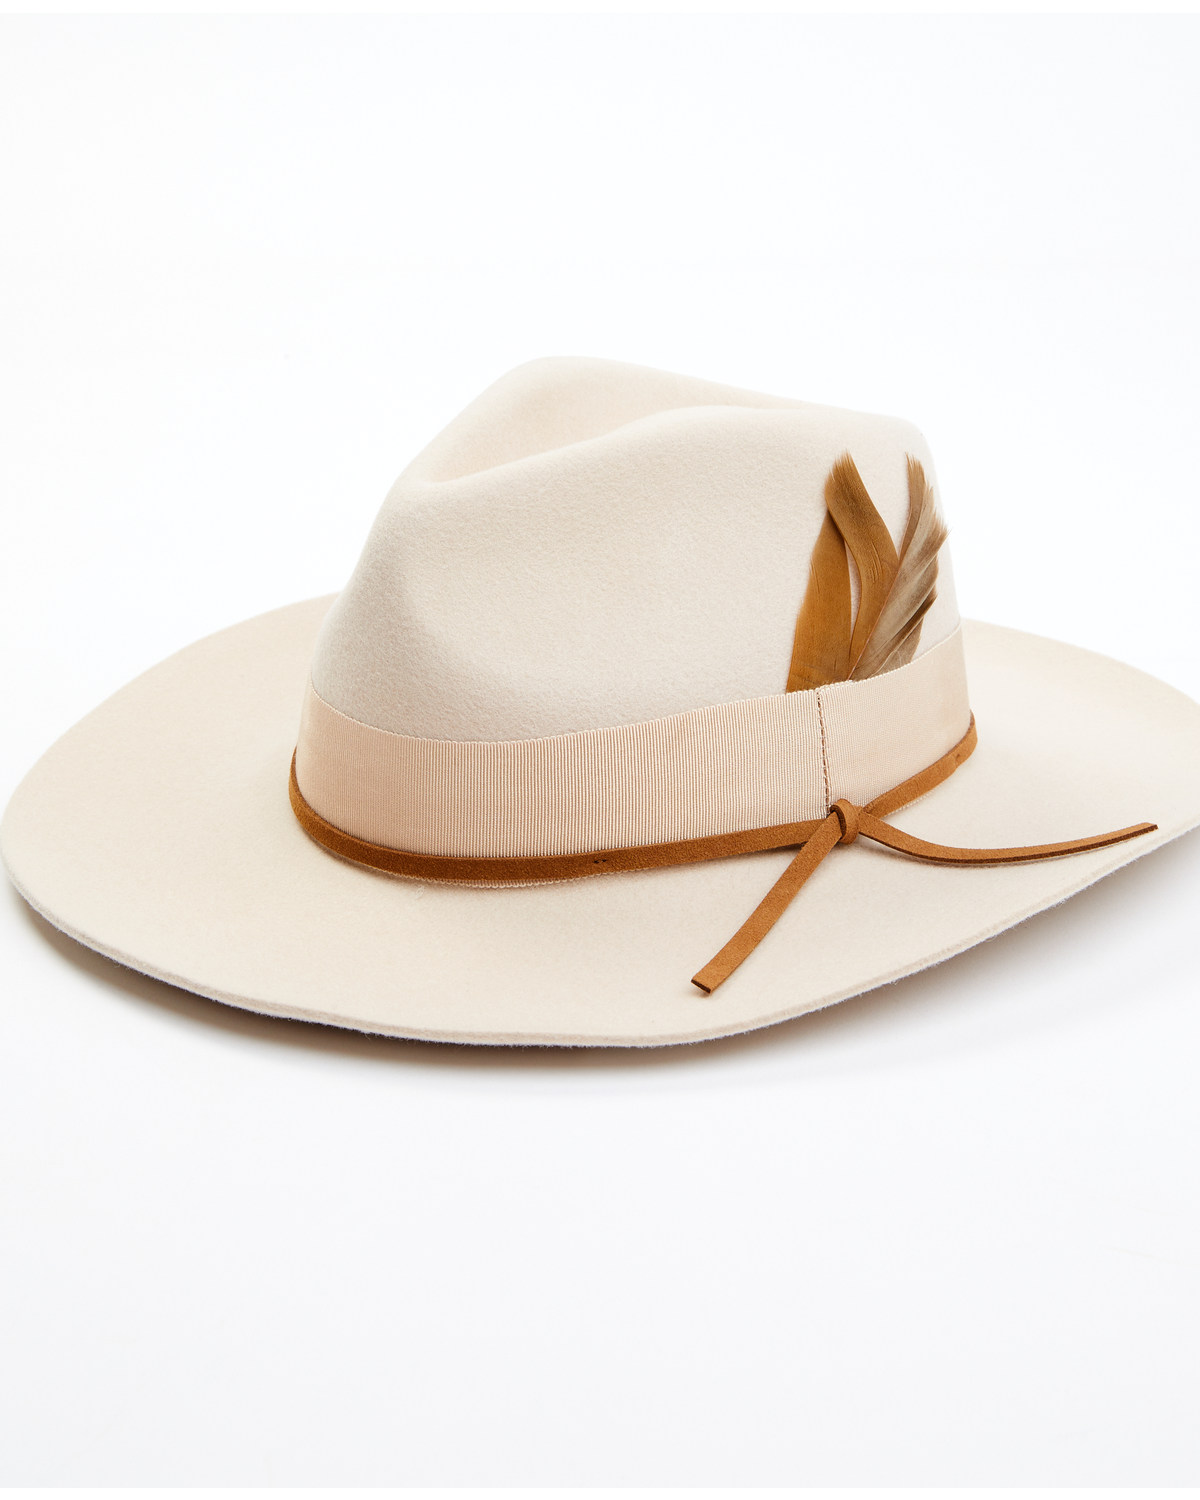 Idyllwind Women's Strawberry Cove Felt Western Fashion Hat